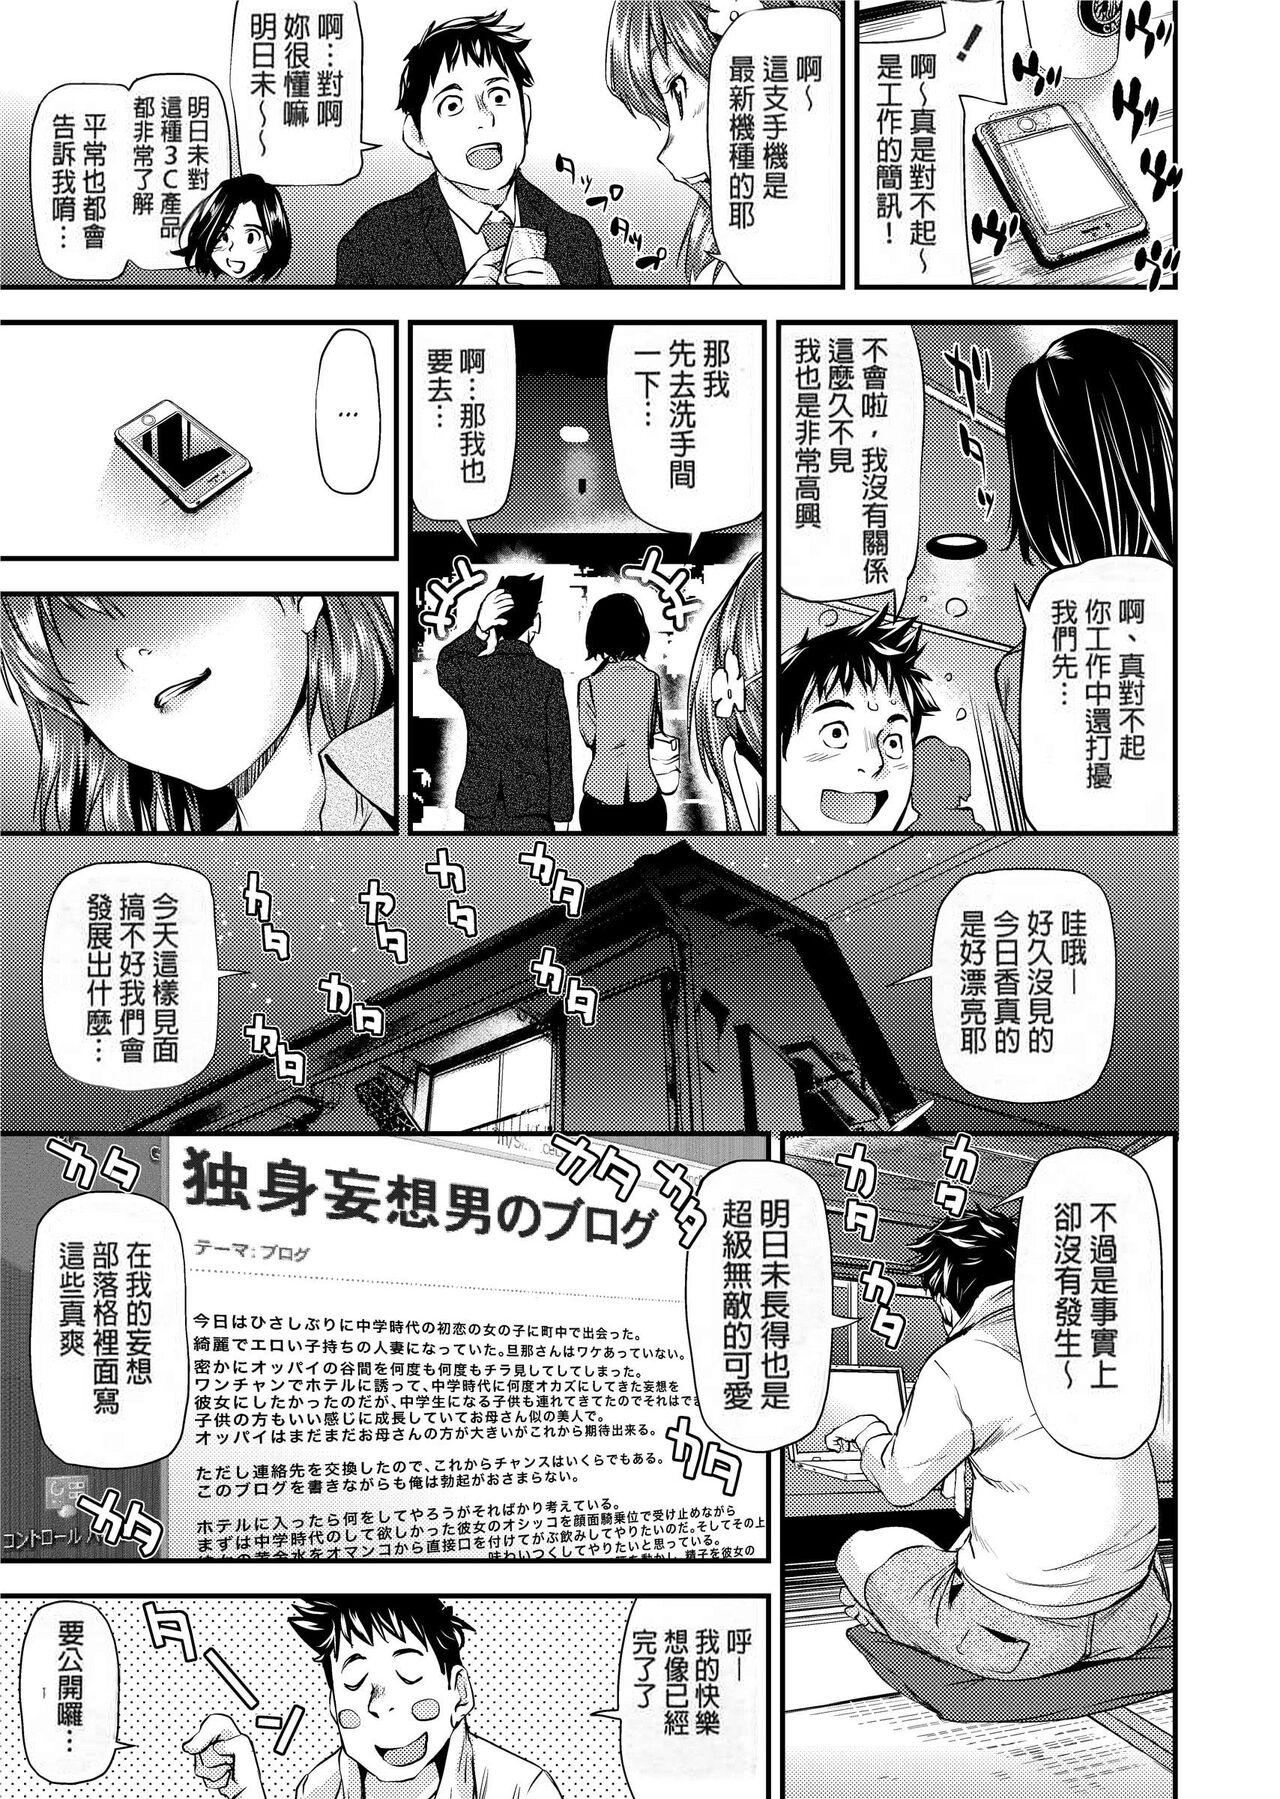 Spycam Shoujo kara Shoujo e... 18 Porn - Page 8